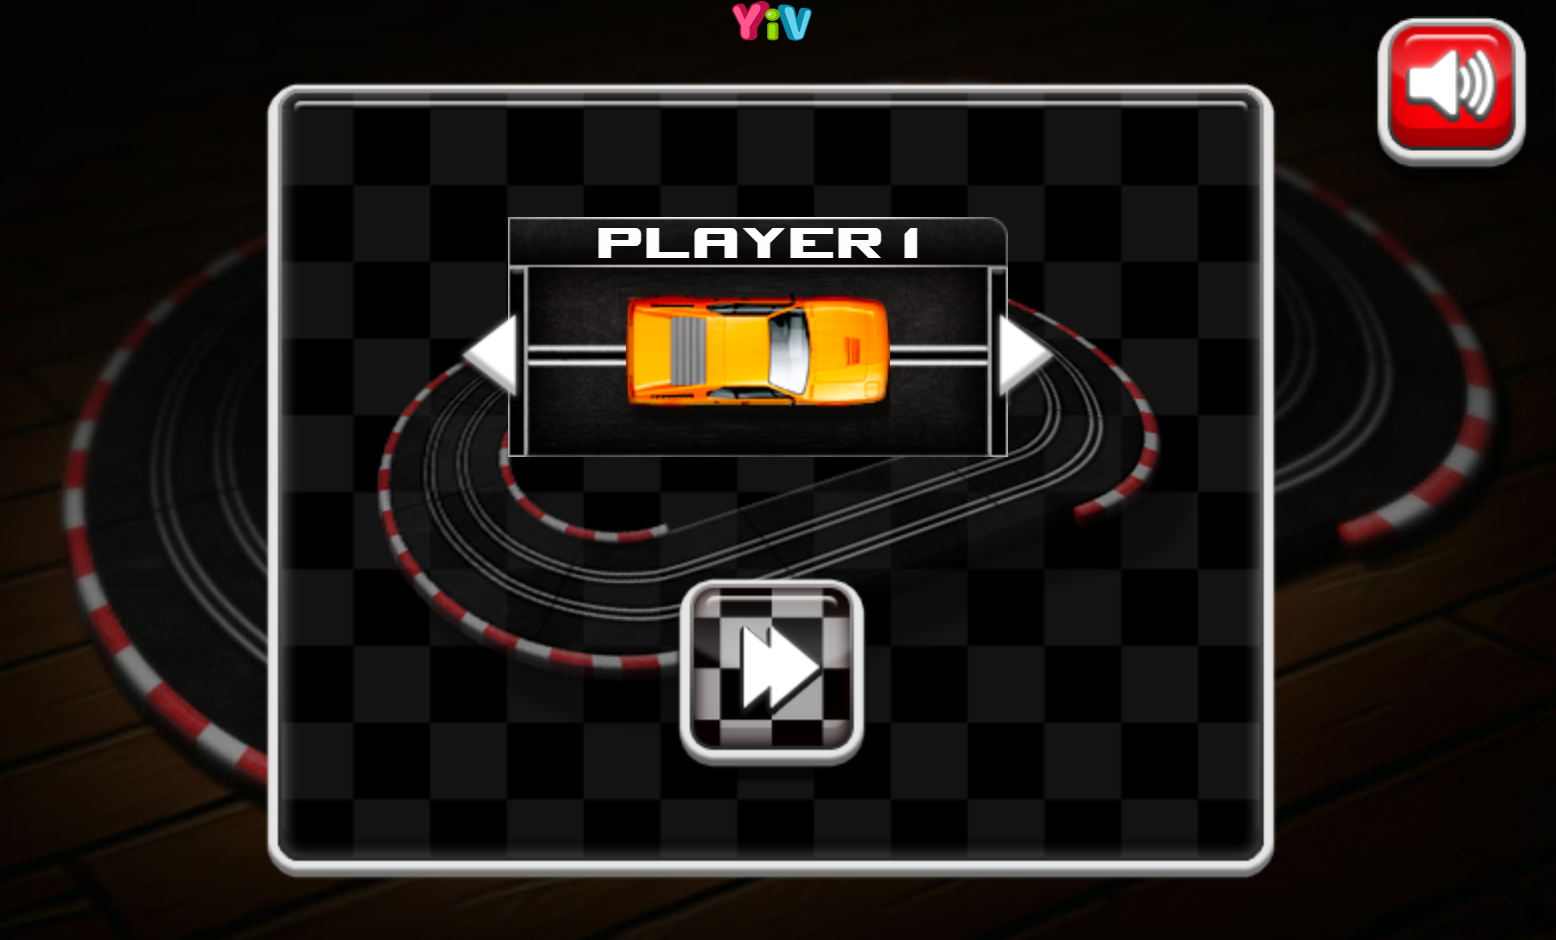 Slot Car Racing  Play Slot Car Racing on PrimaryGames